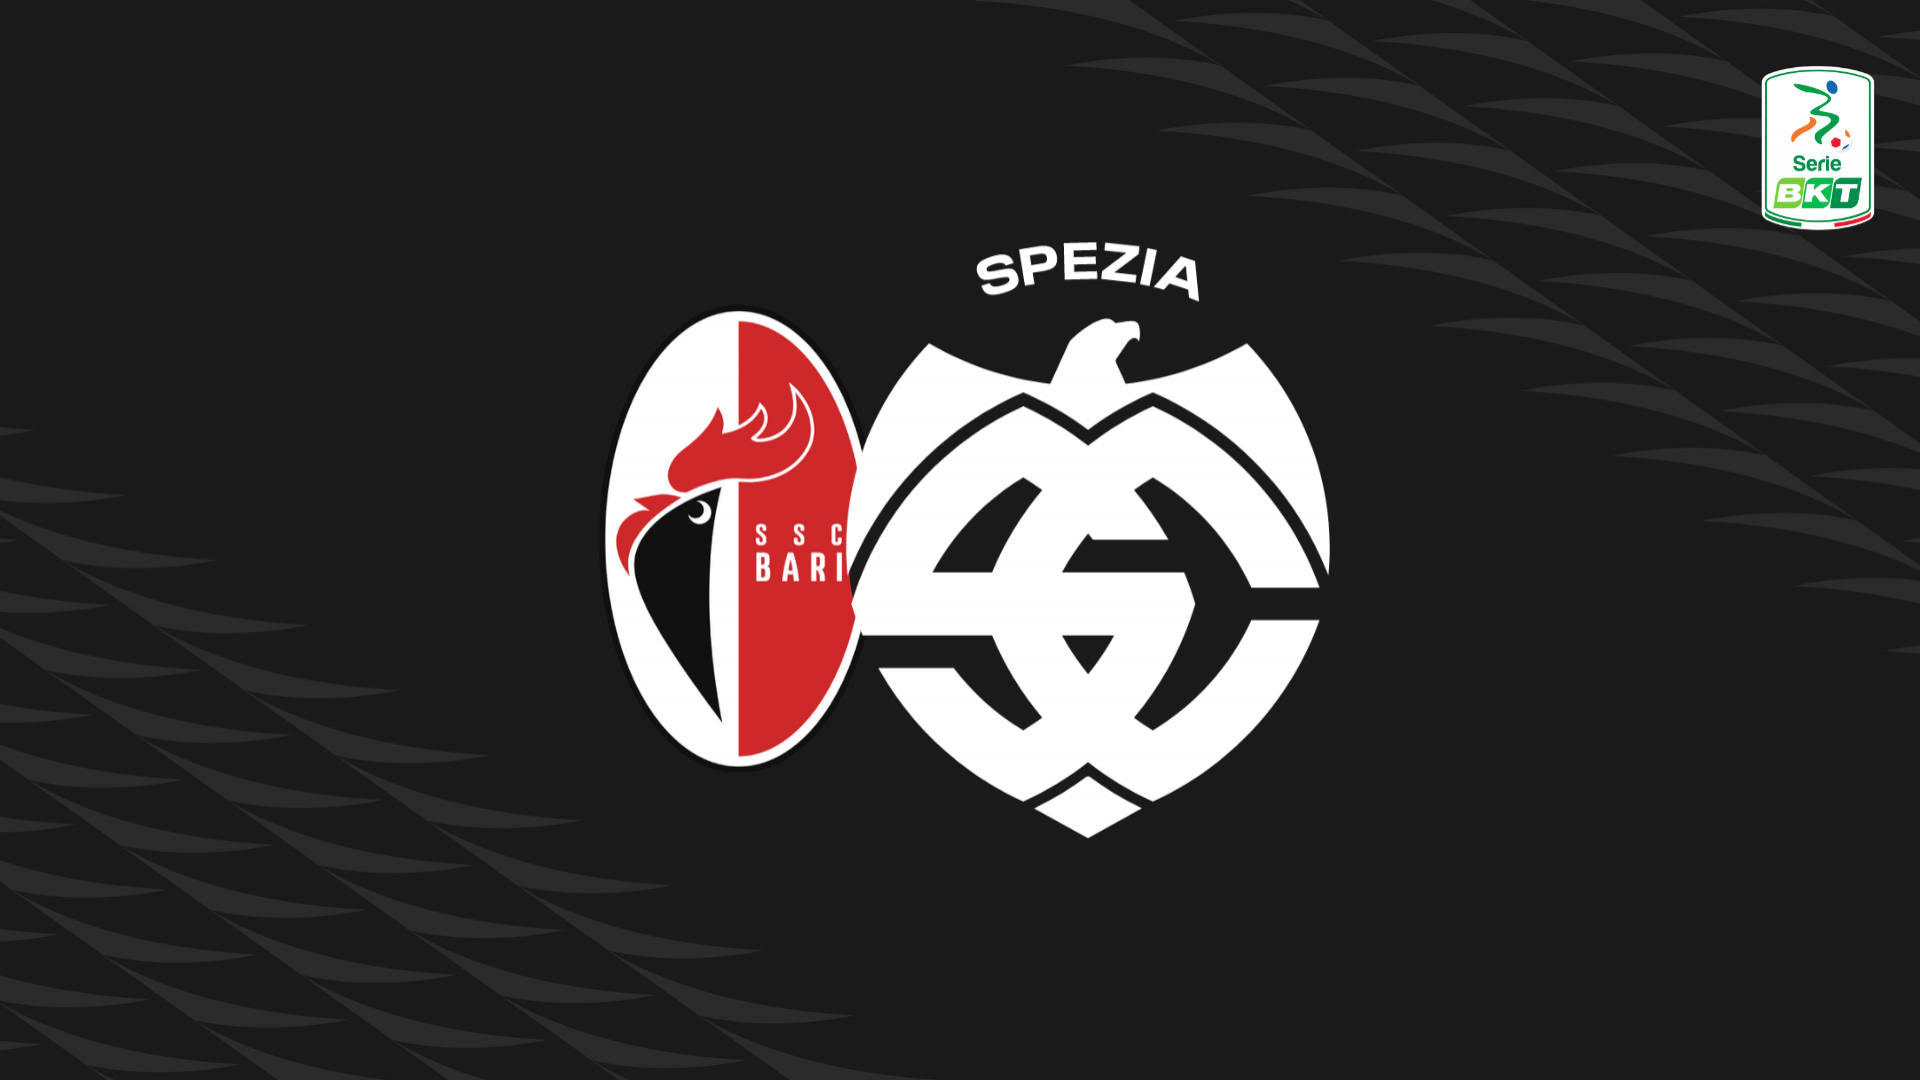 Serie BKT: Bari-Spezia 1-1